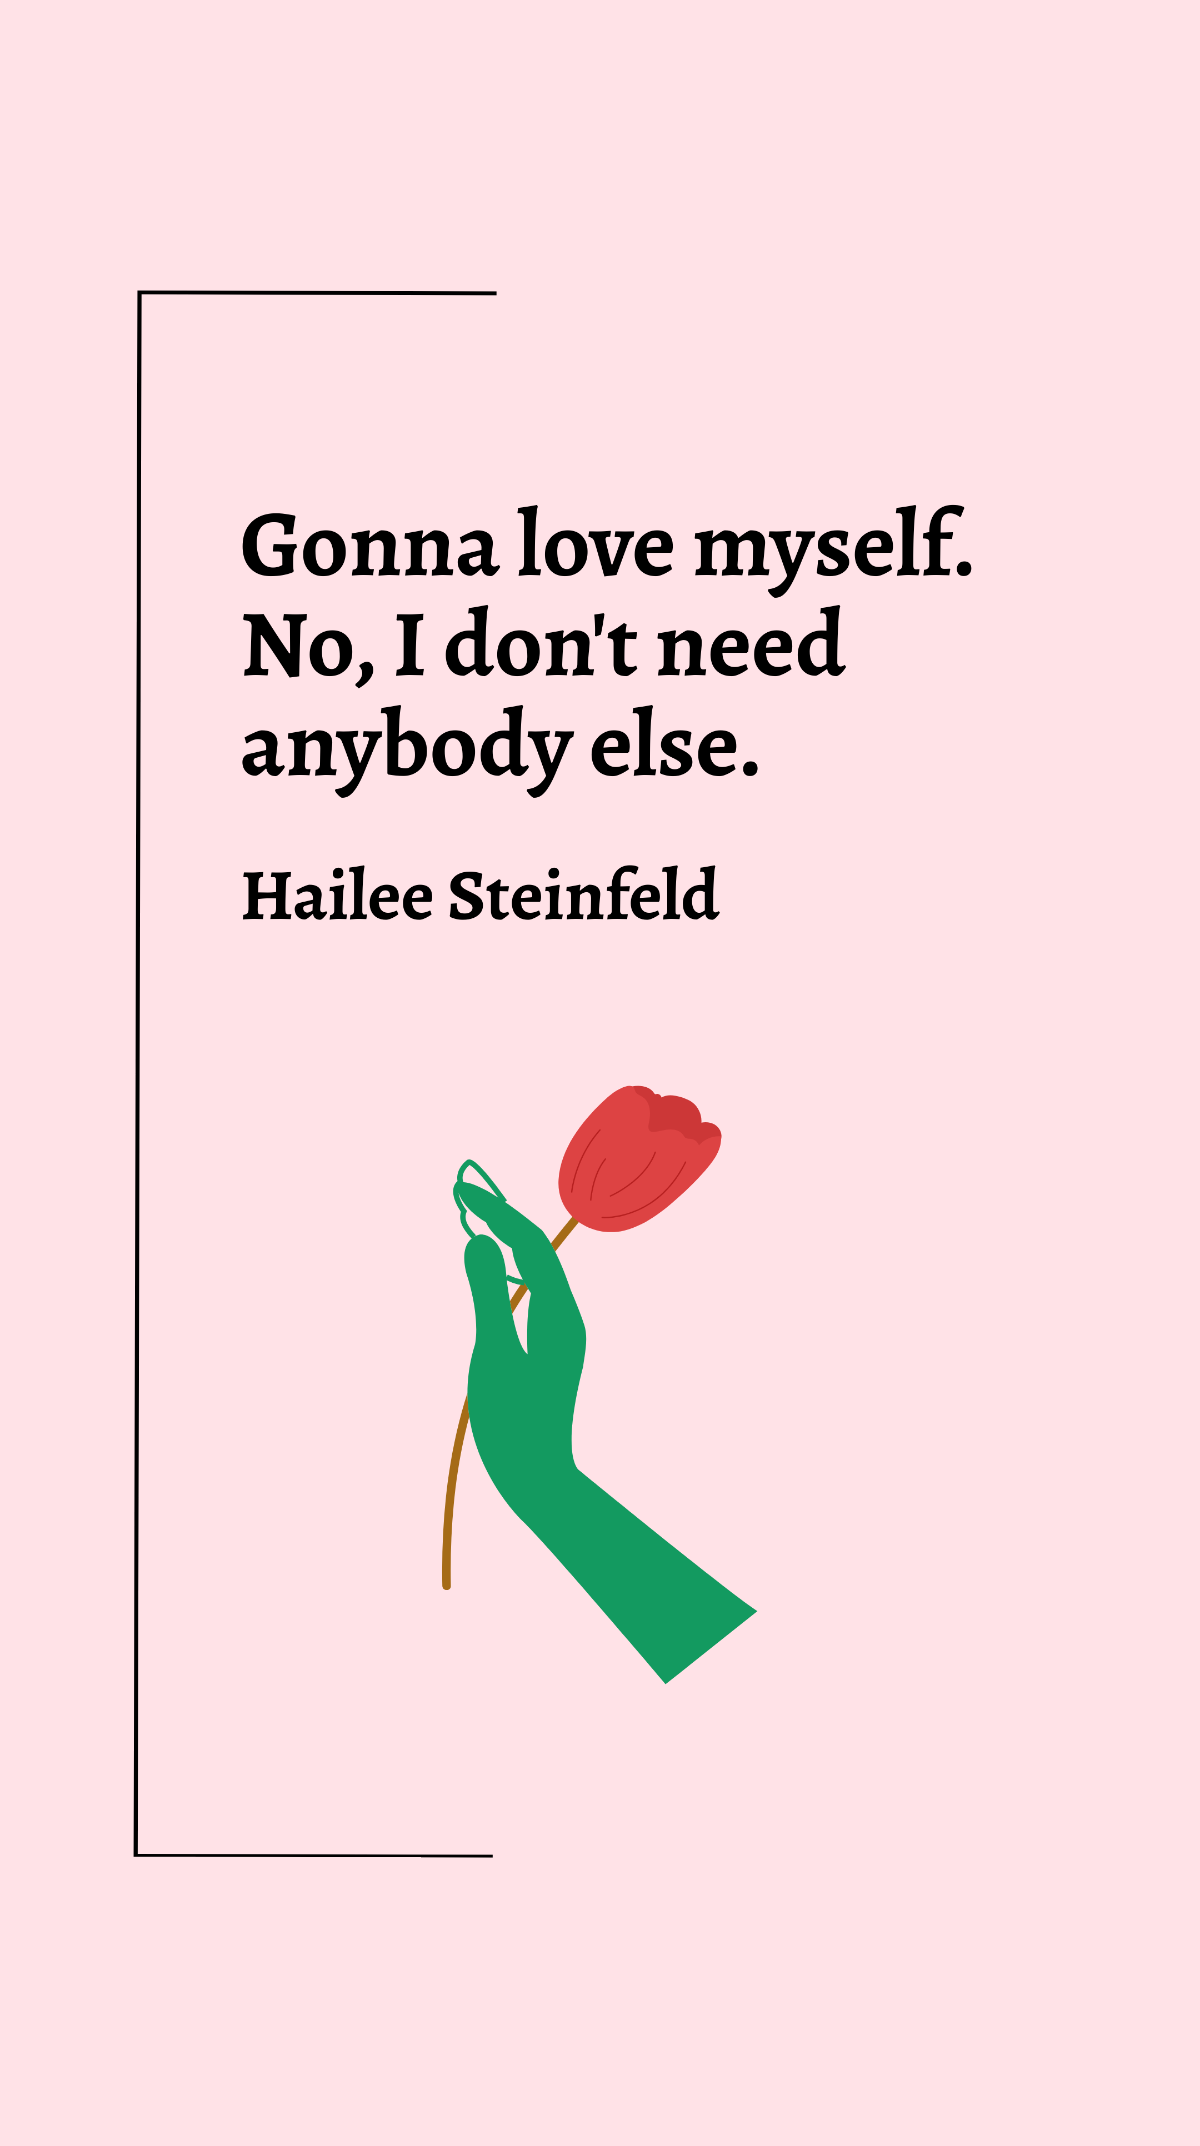 Hailee Steinfeld - Gonna love myself. No, I don't need anybody else.